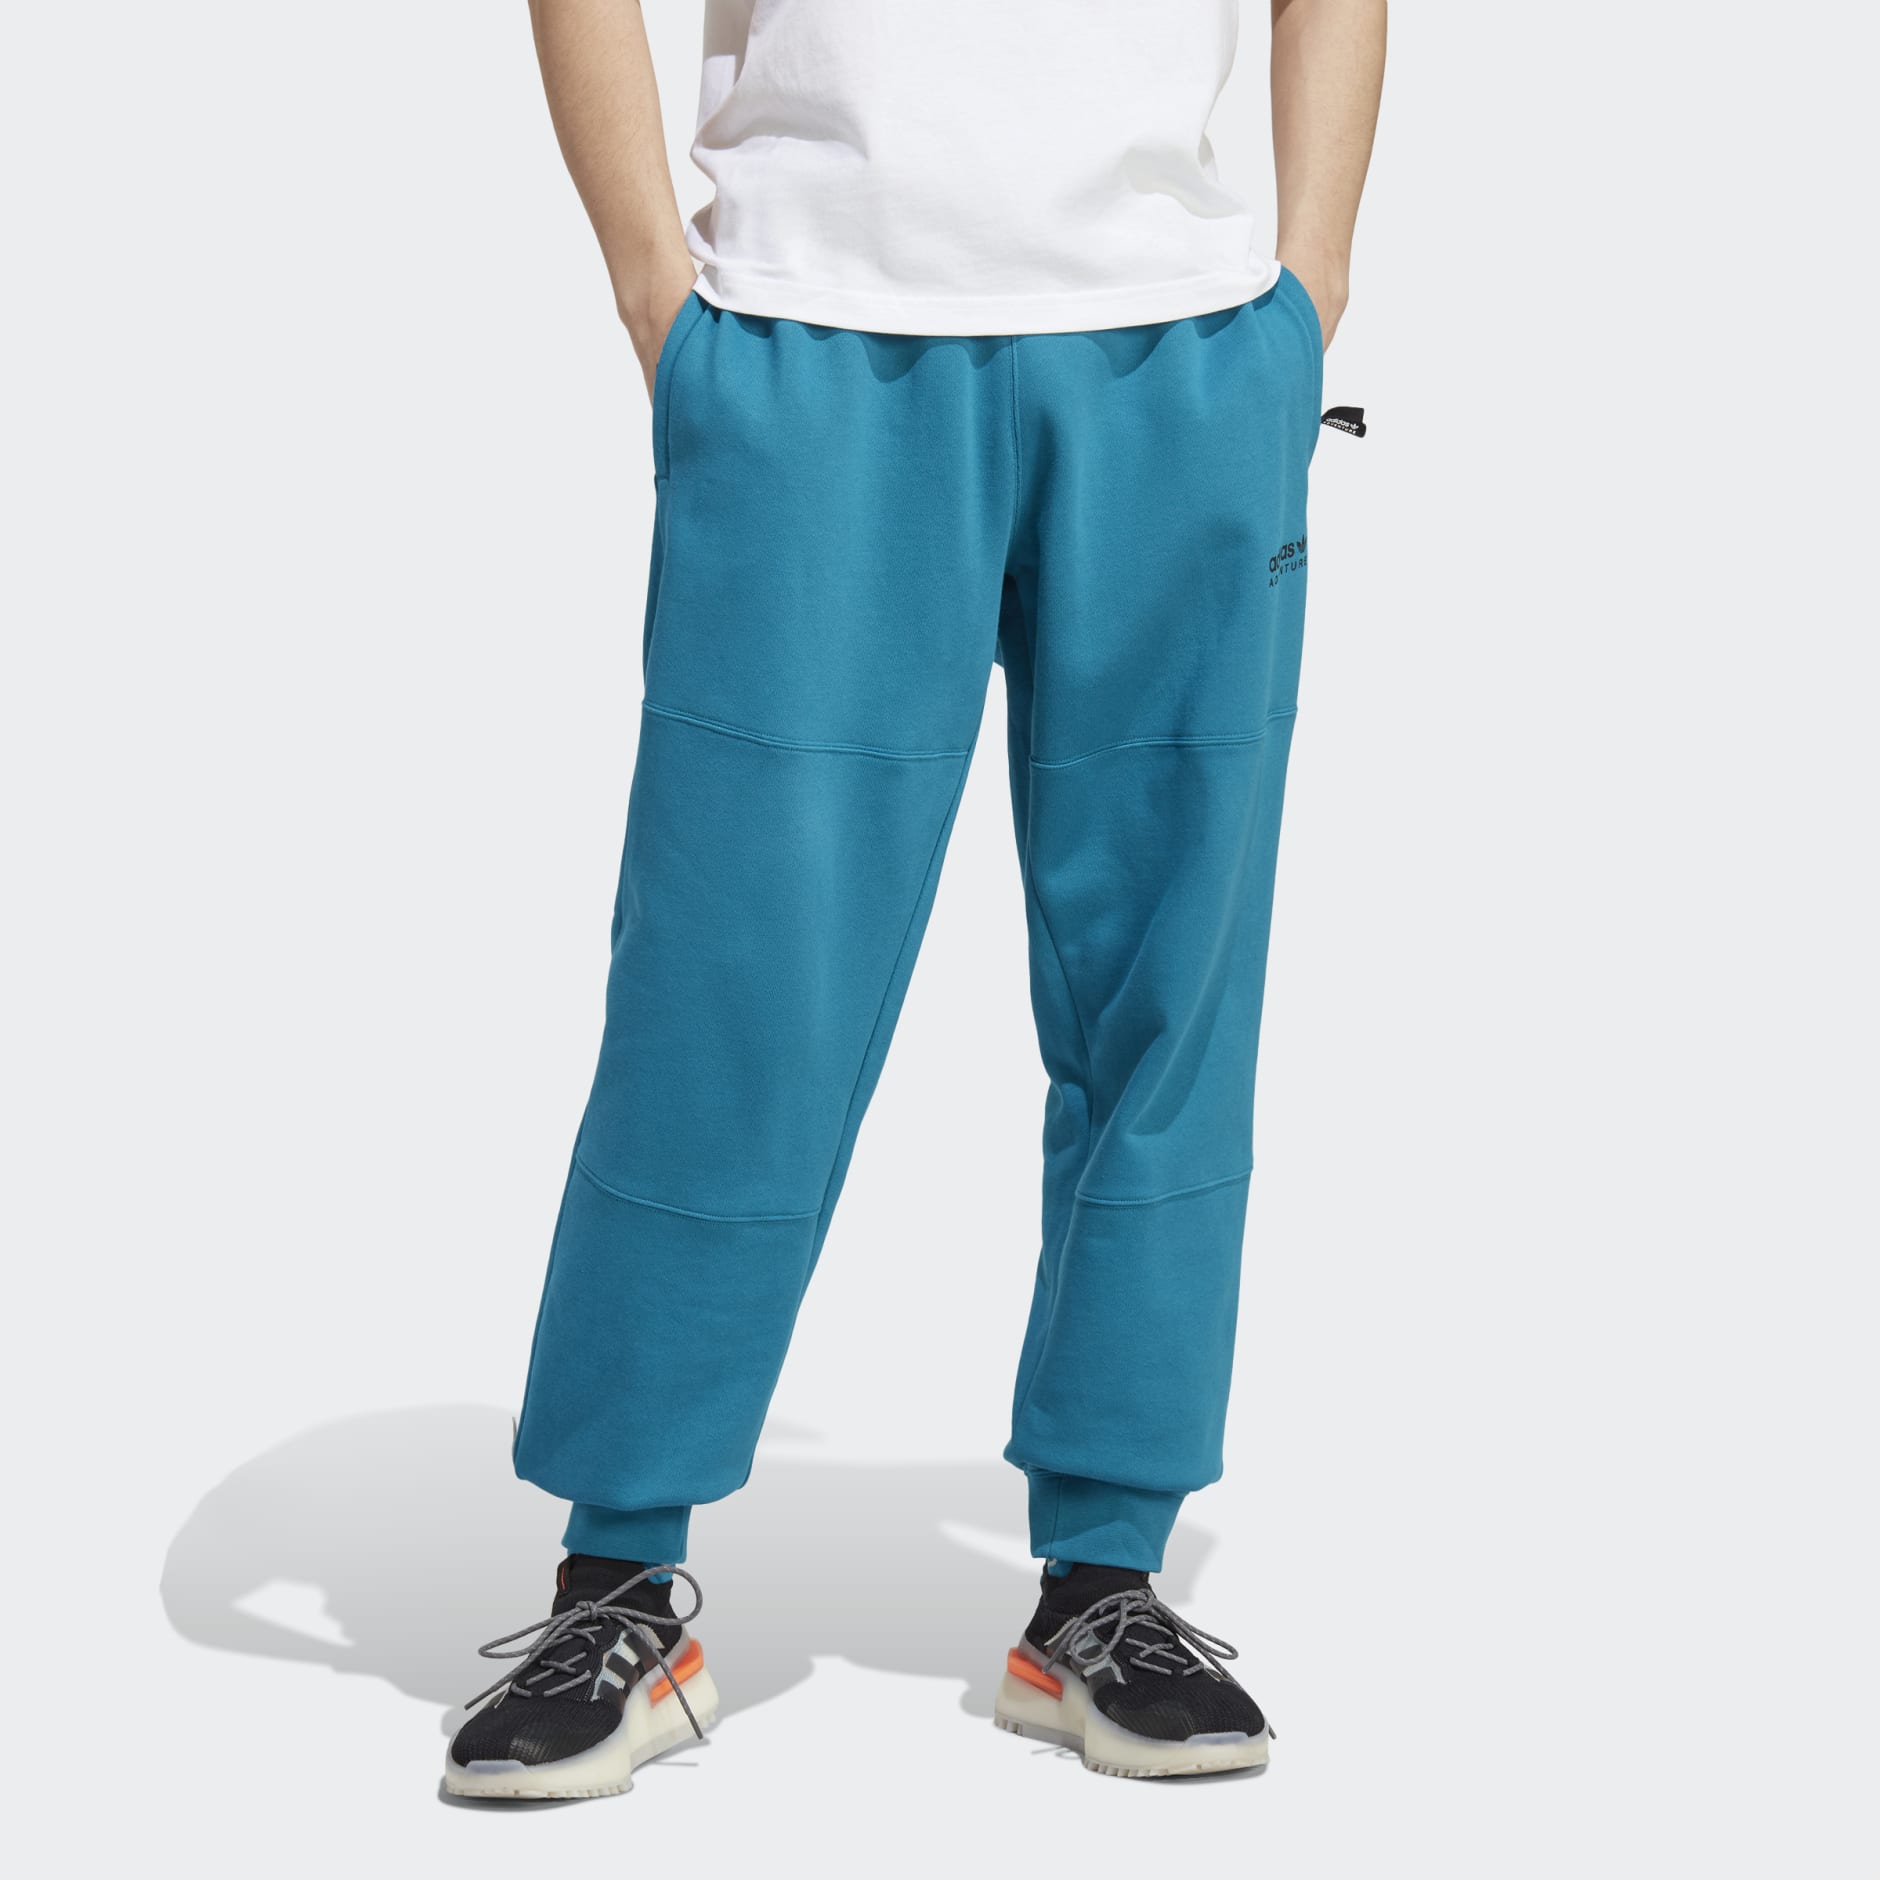 Men's Clothing - adidas Adventure Sweat Pants - Turquoise | adidas Qatar